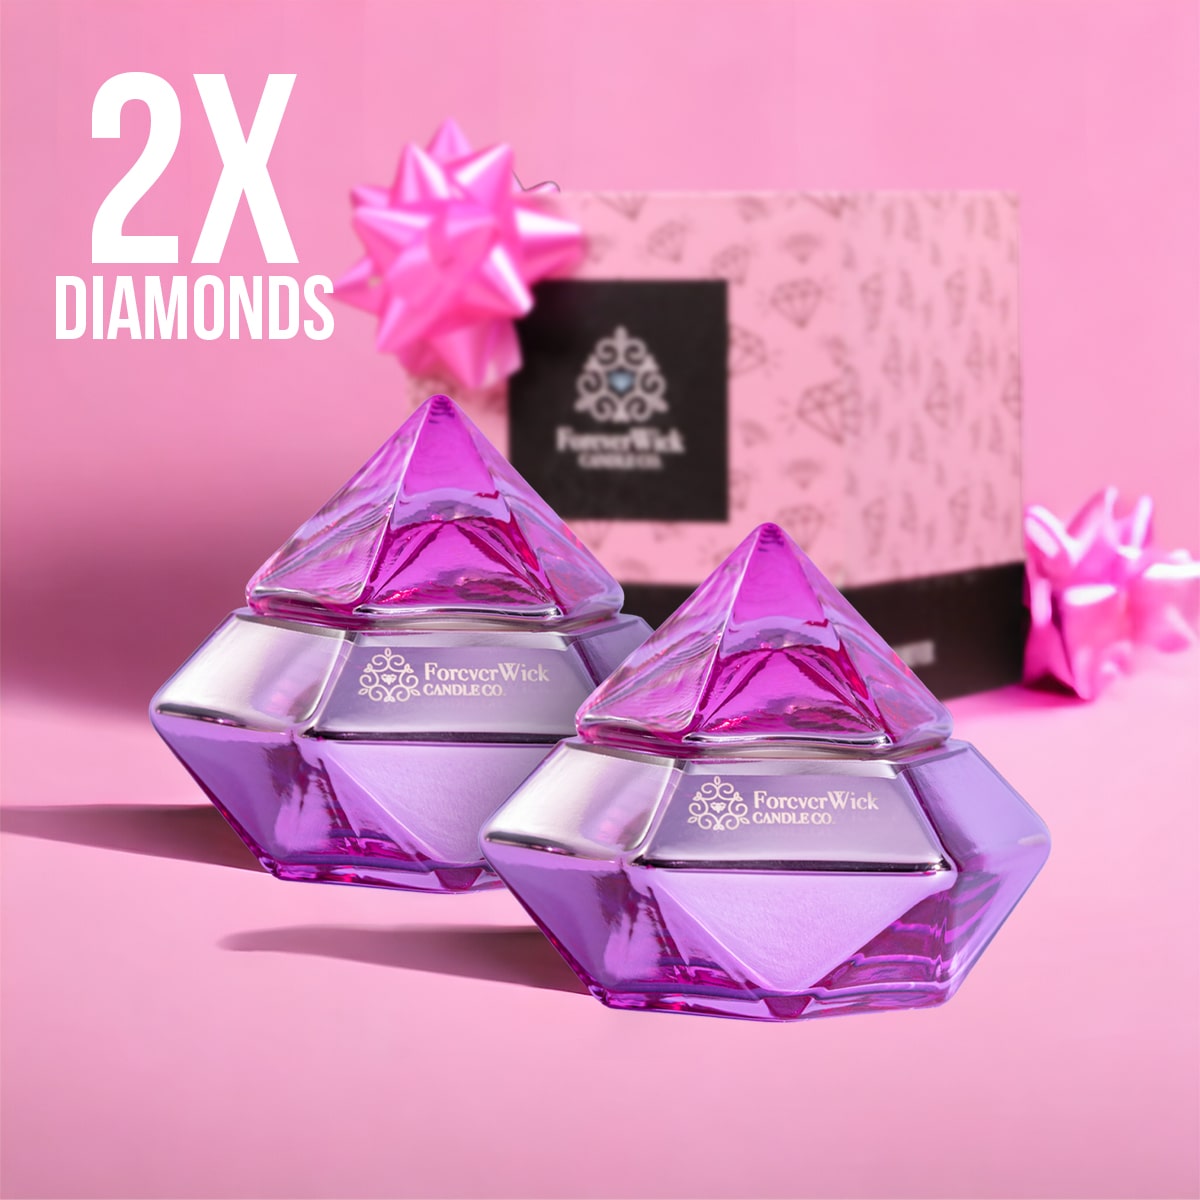 The Pink Diamond Double Bundle